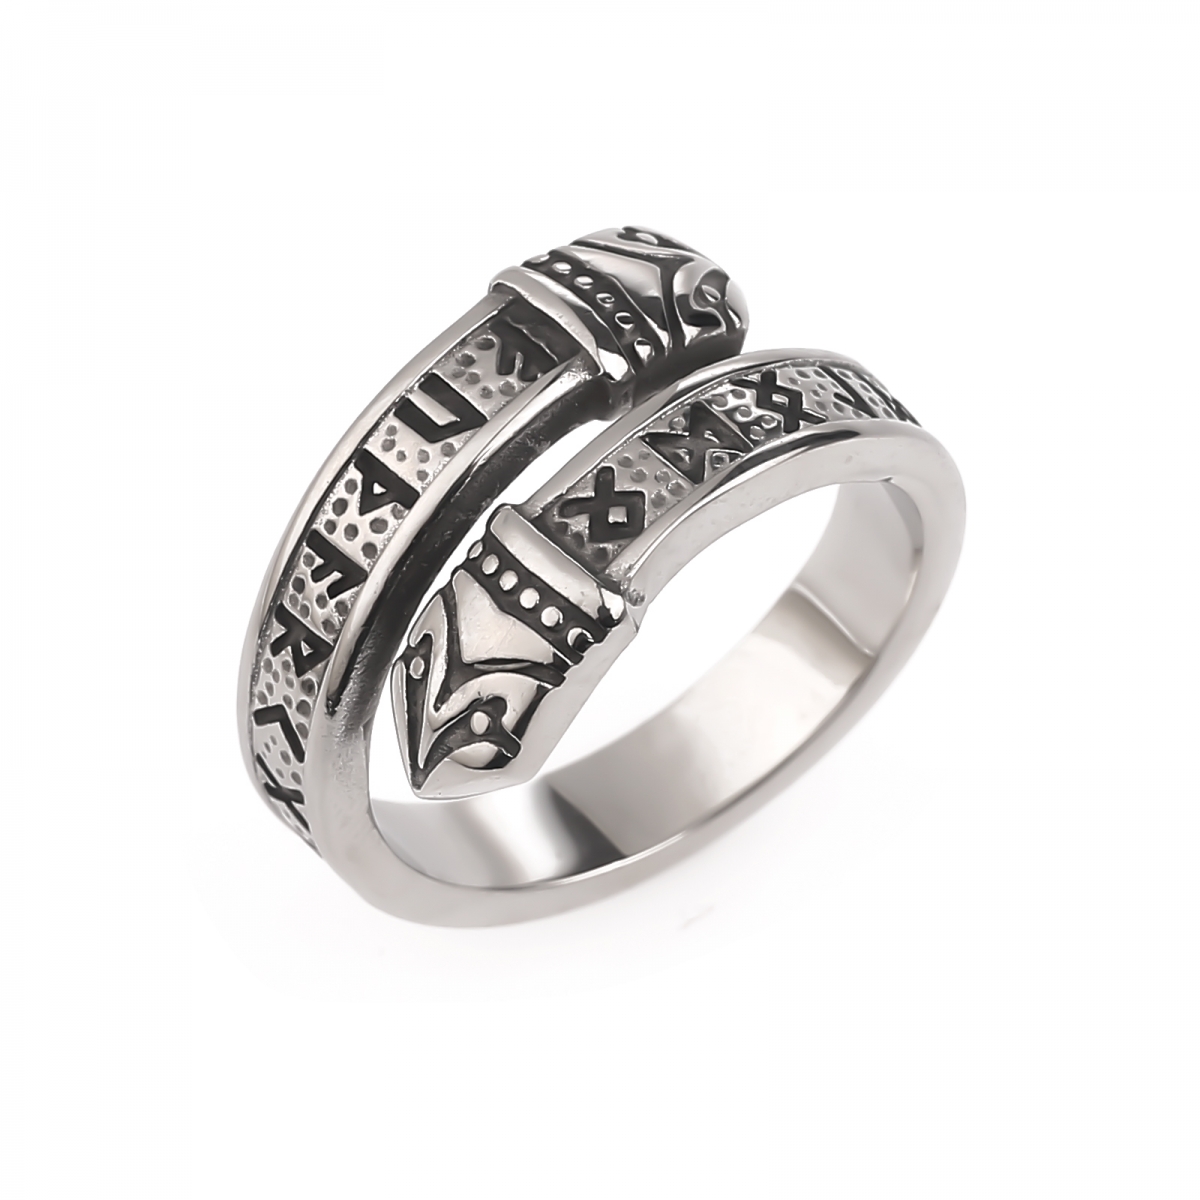 World Serpent Jormungandr Snake Ring US$2.9/PC-NORSECOLLECTION- Viking Jewelry,Viking Necklace,Viking Bracelet,Viking Rings,Viking Mugs,Viking Accessories,Viking Crafts